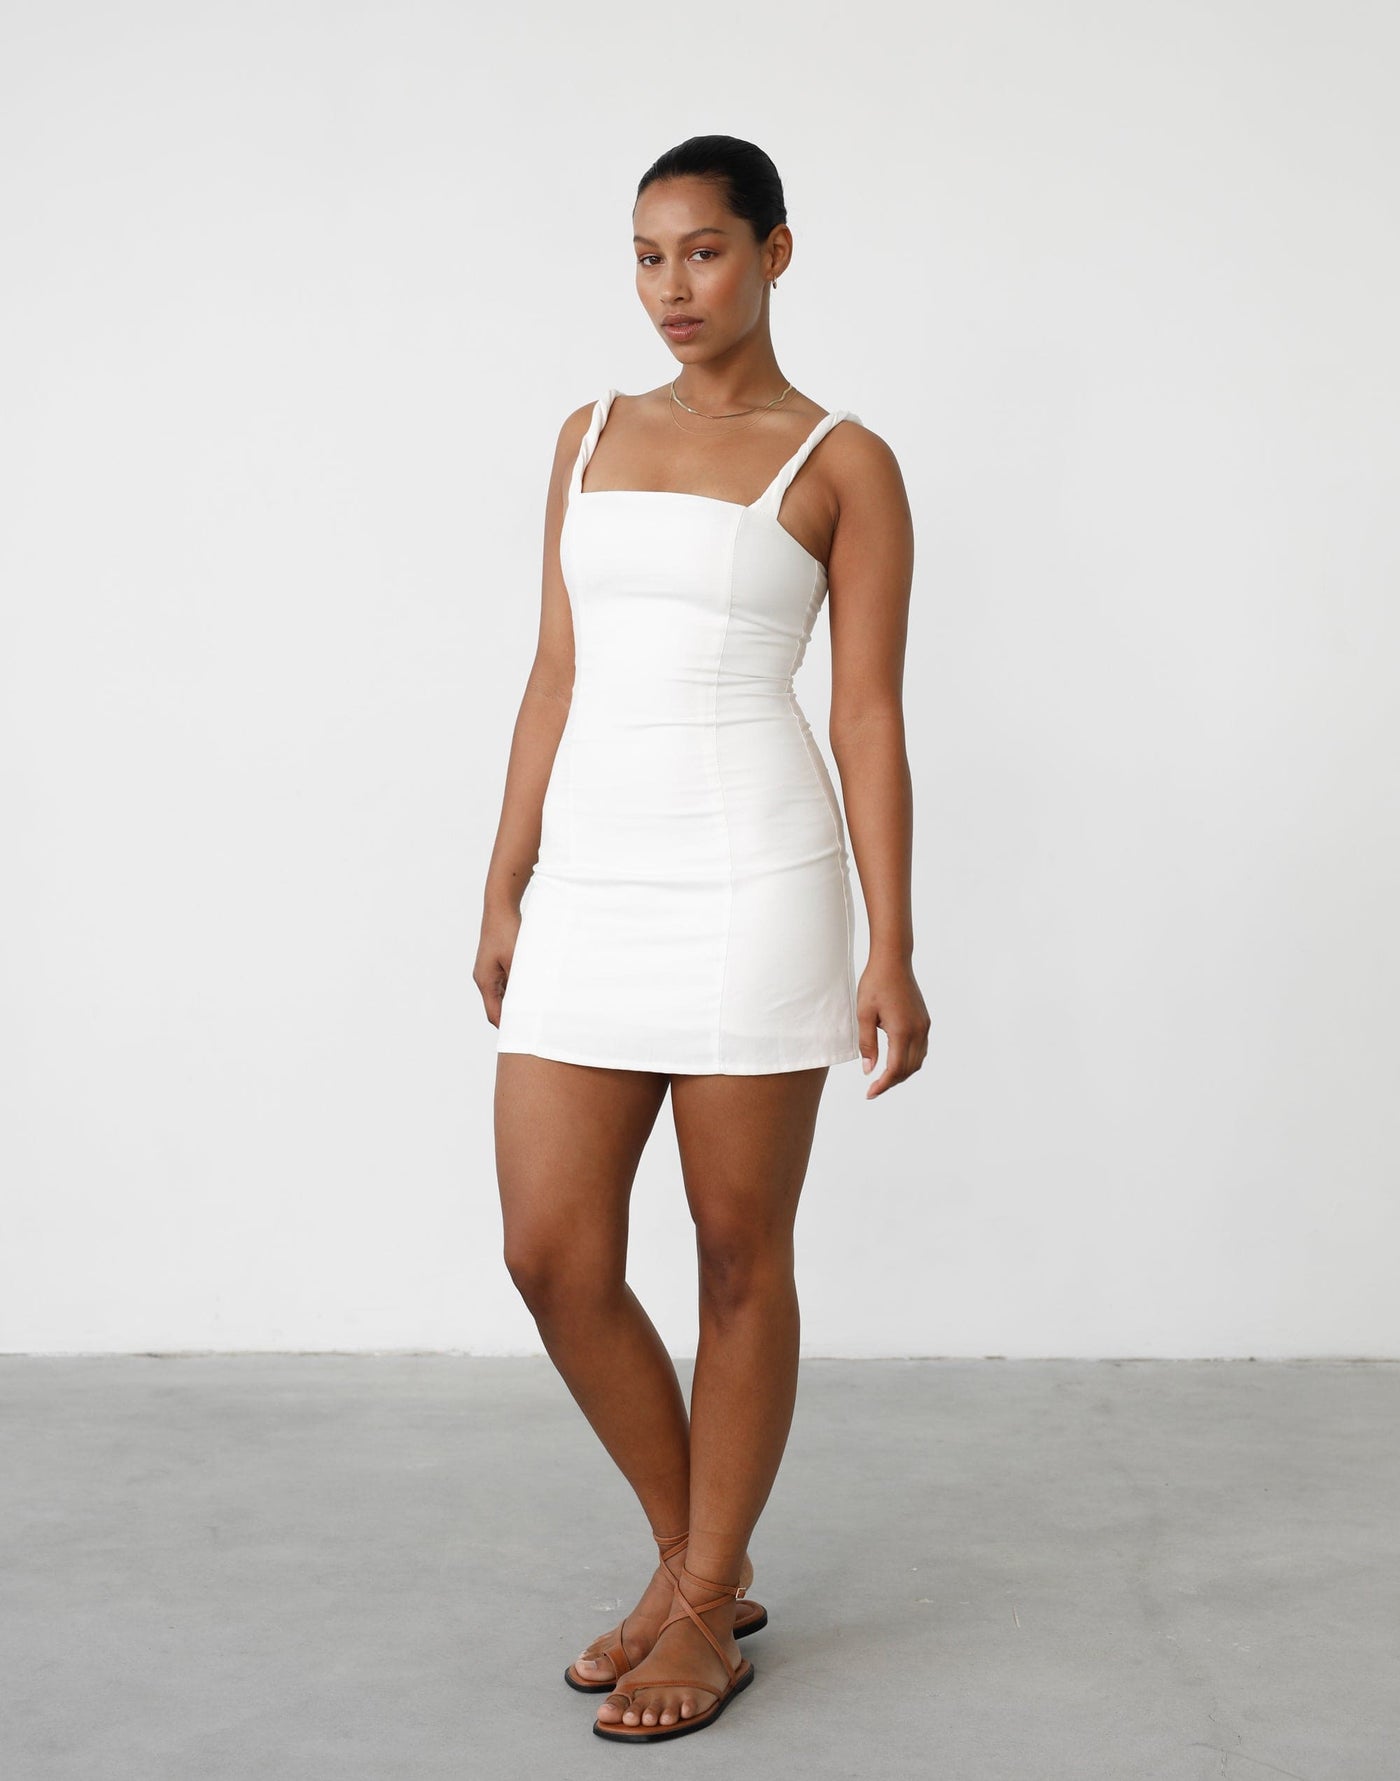 Bacalar Mini Dress (White) - Twisted Strap Mini Dress - Women's Dress - Charcoal Clothing